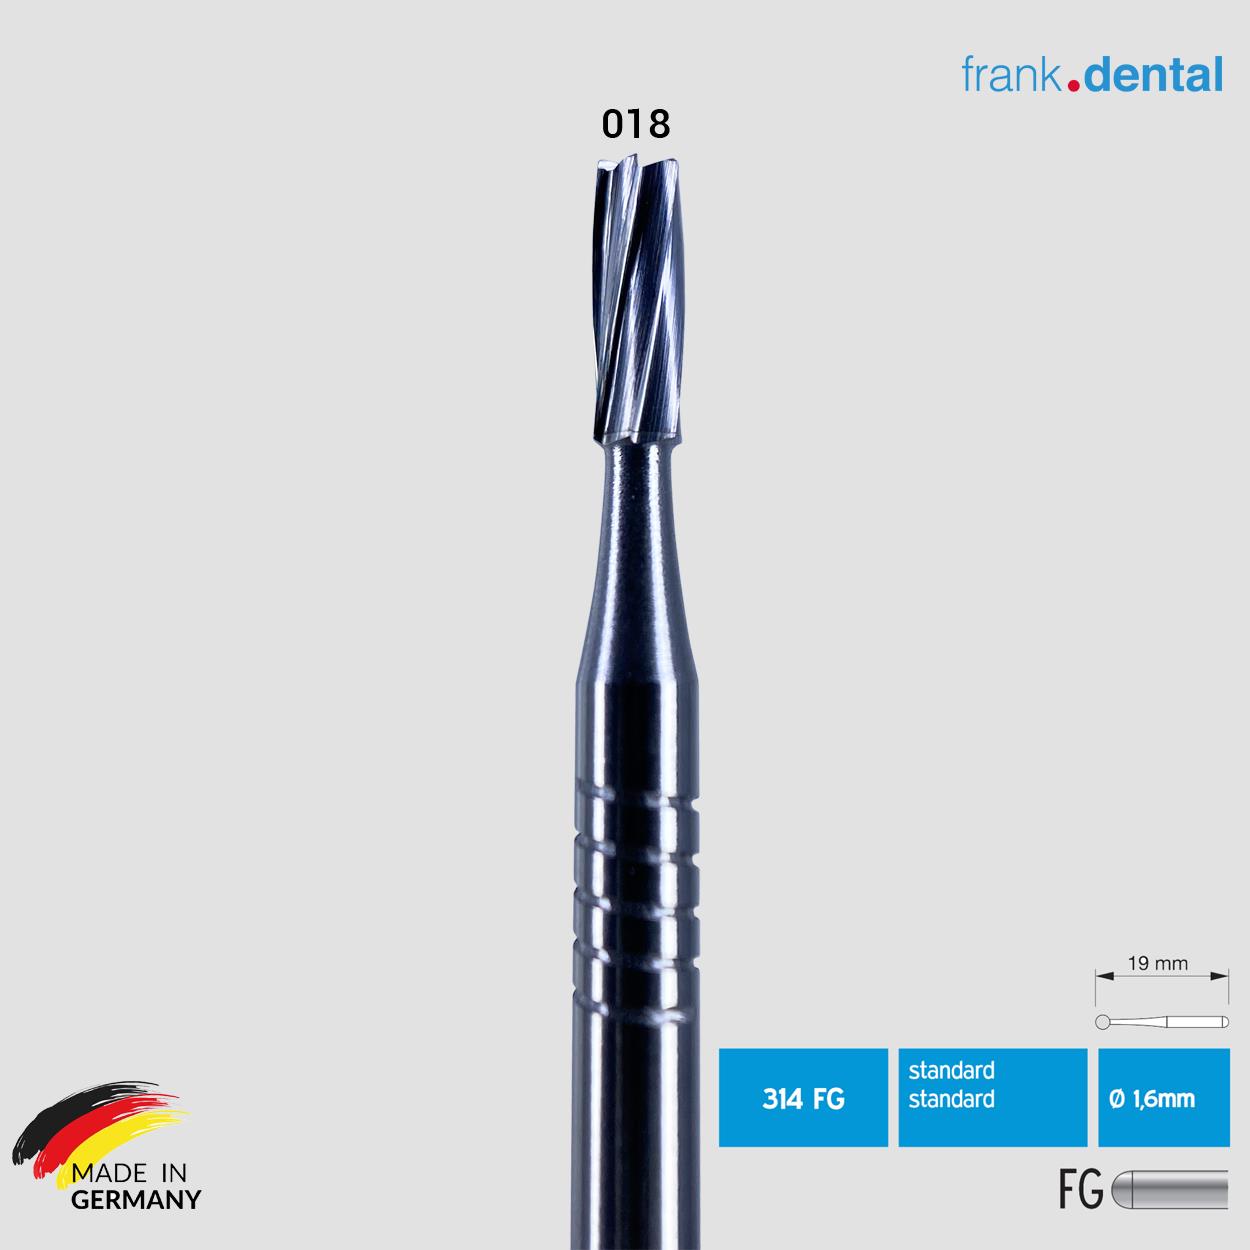 DentrealStore - Frank Dental Tungsten Carpide Bur C.21FG - for Air Turbine - 5 Pcs